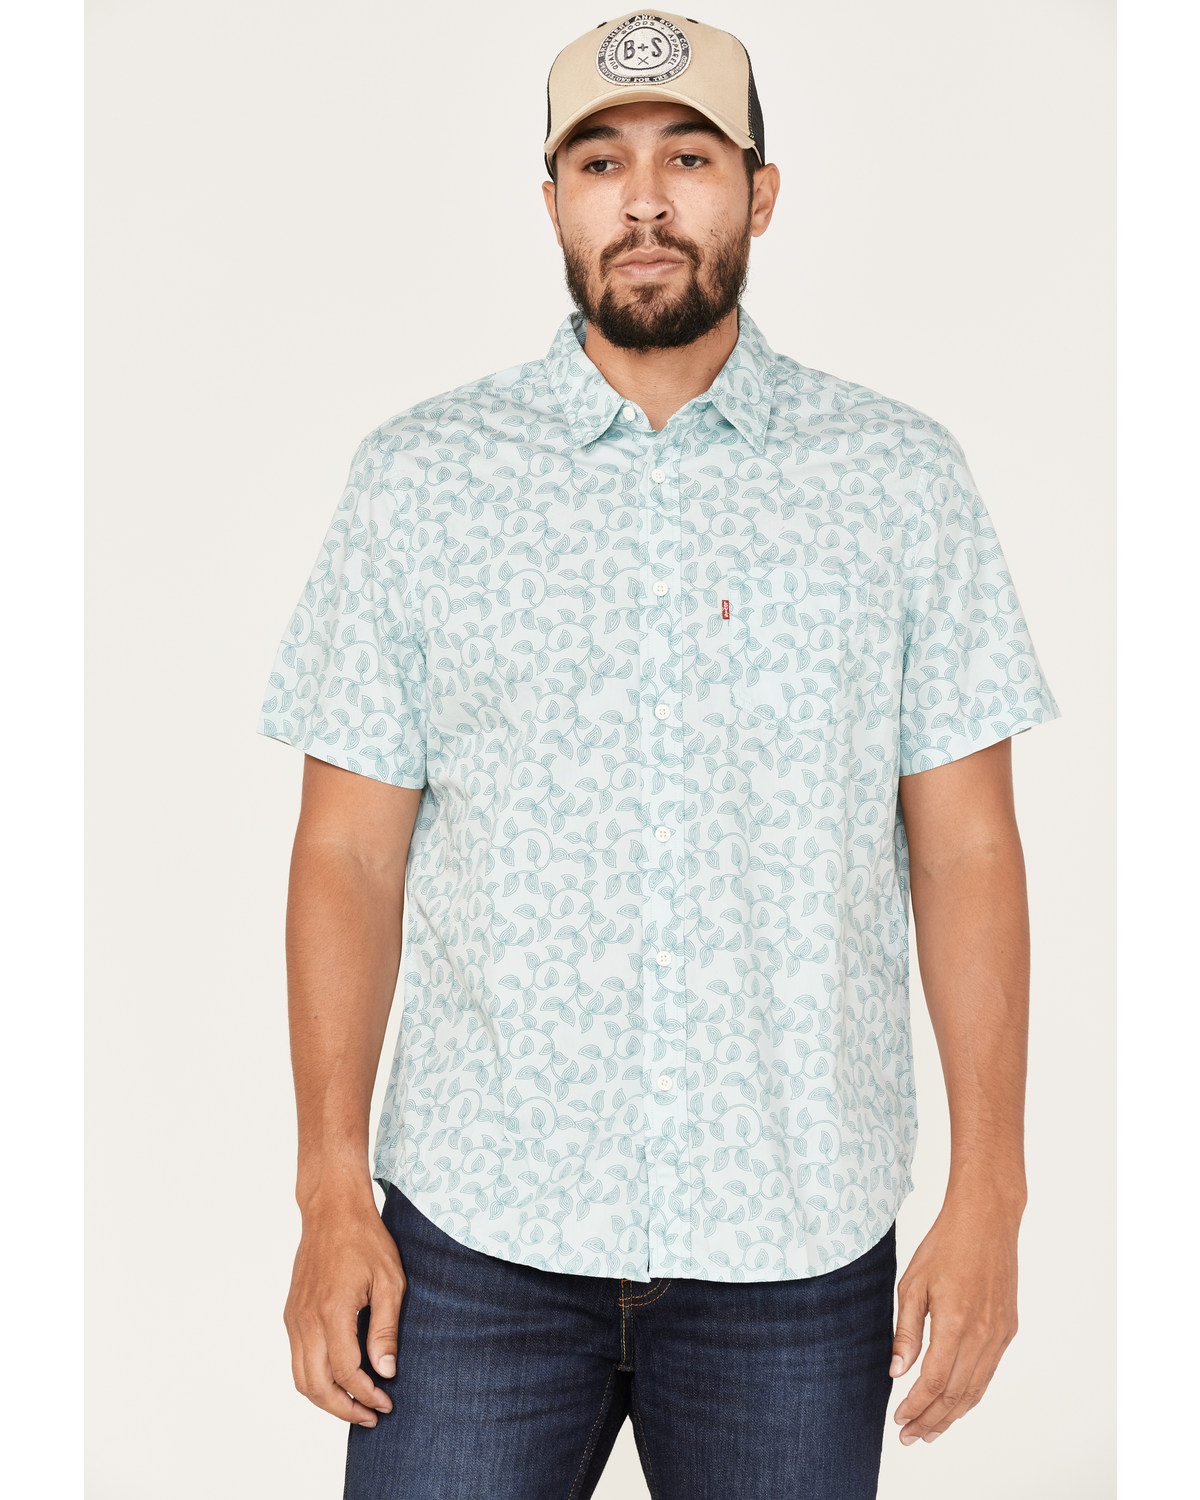 Levi's Men's Classic Swirly Floral Print Short Sleeve Button Down Shirt